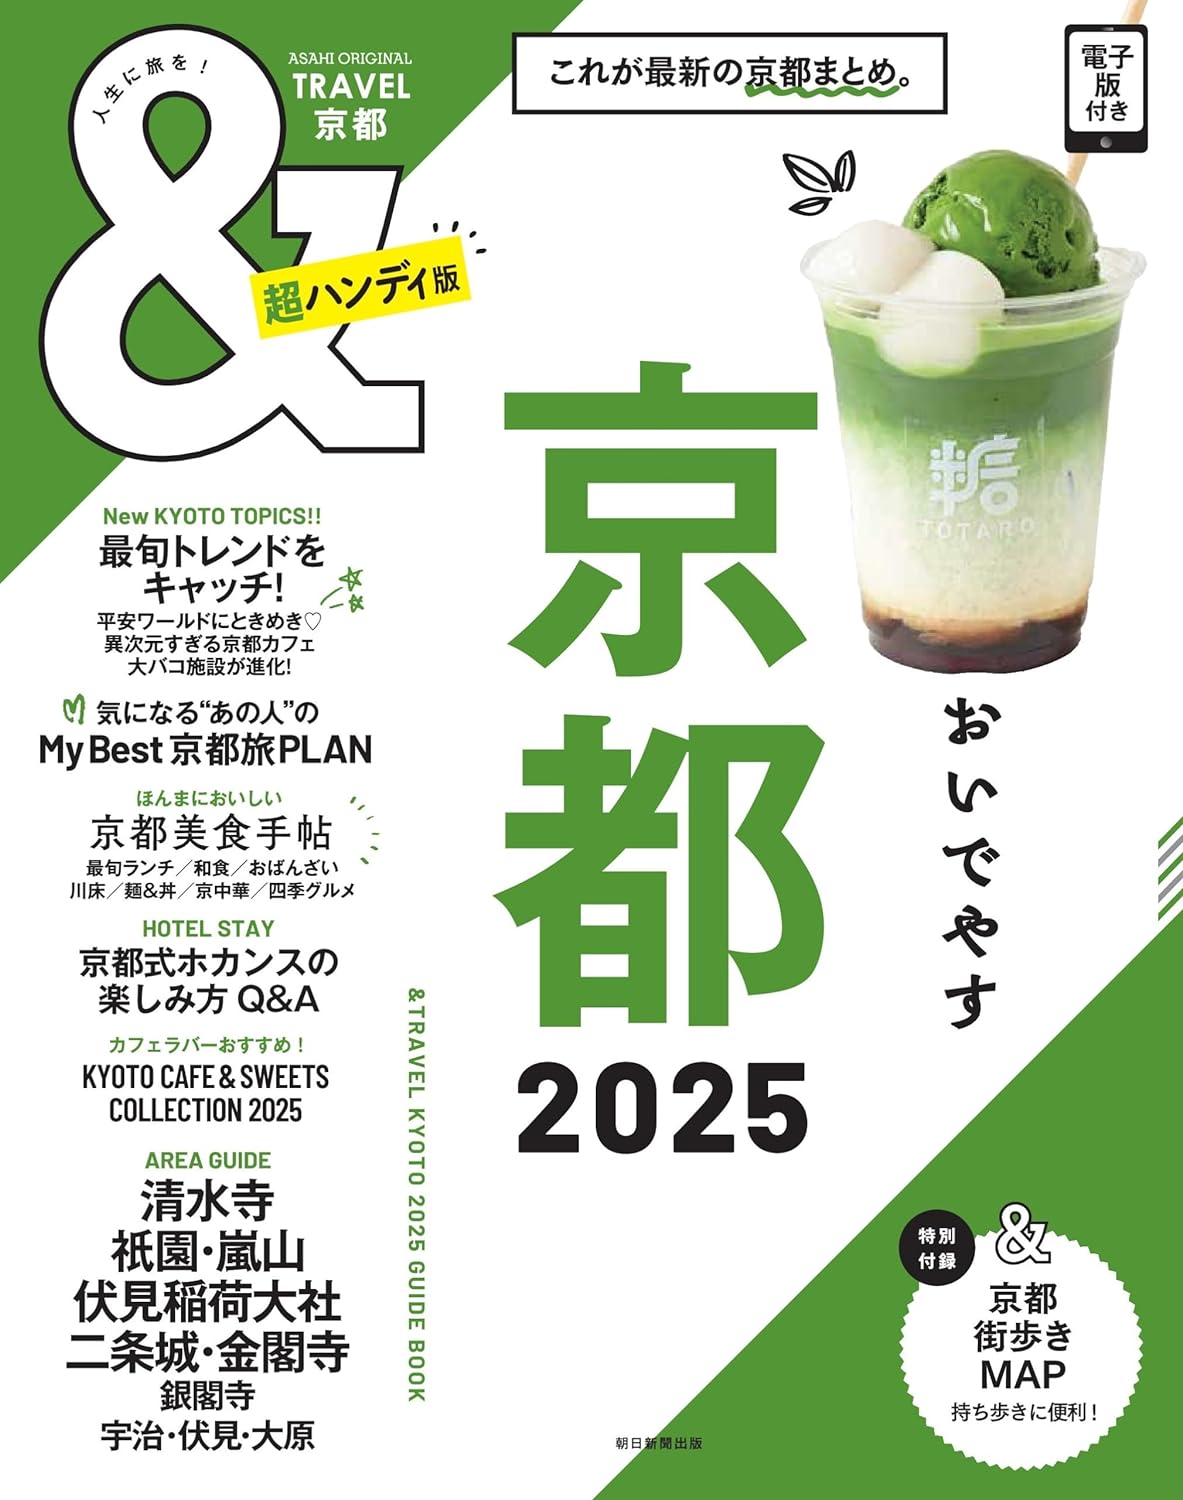 &TRAVEL 京都 2025 【超ハンディ版】 (アサヒオリジナル)